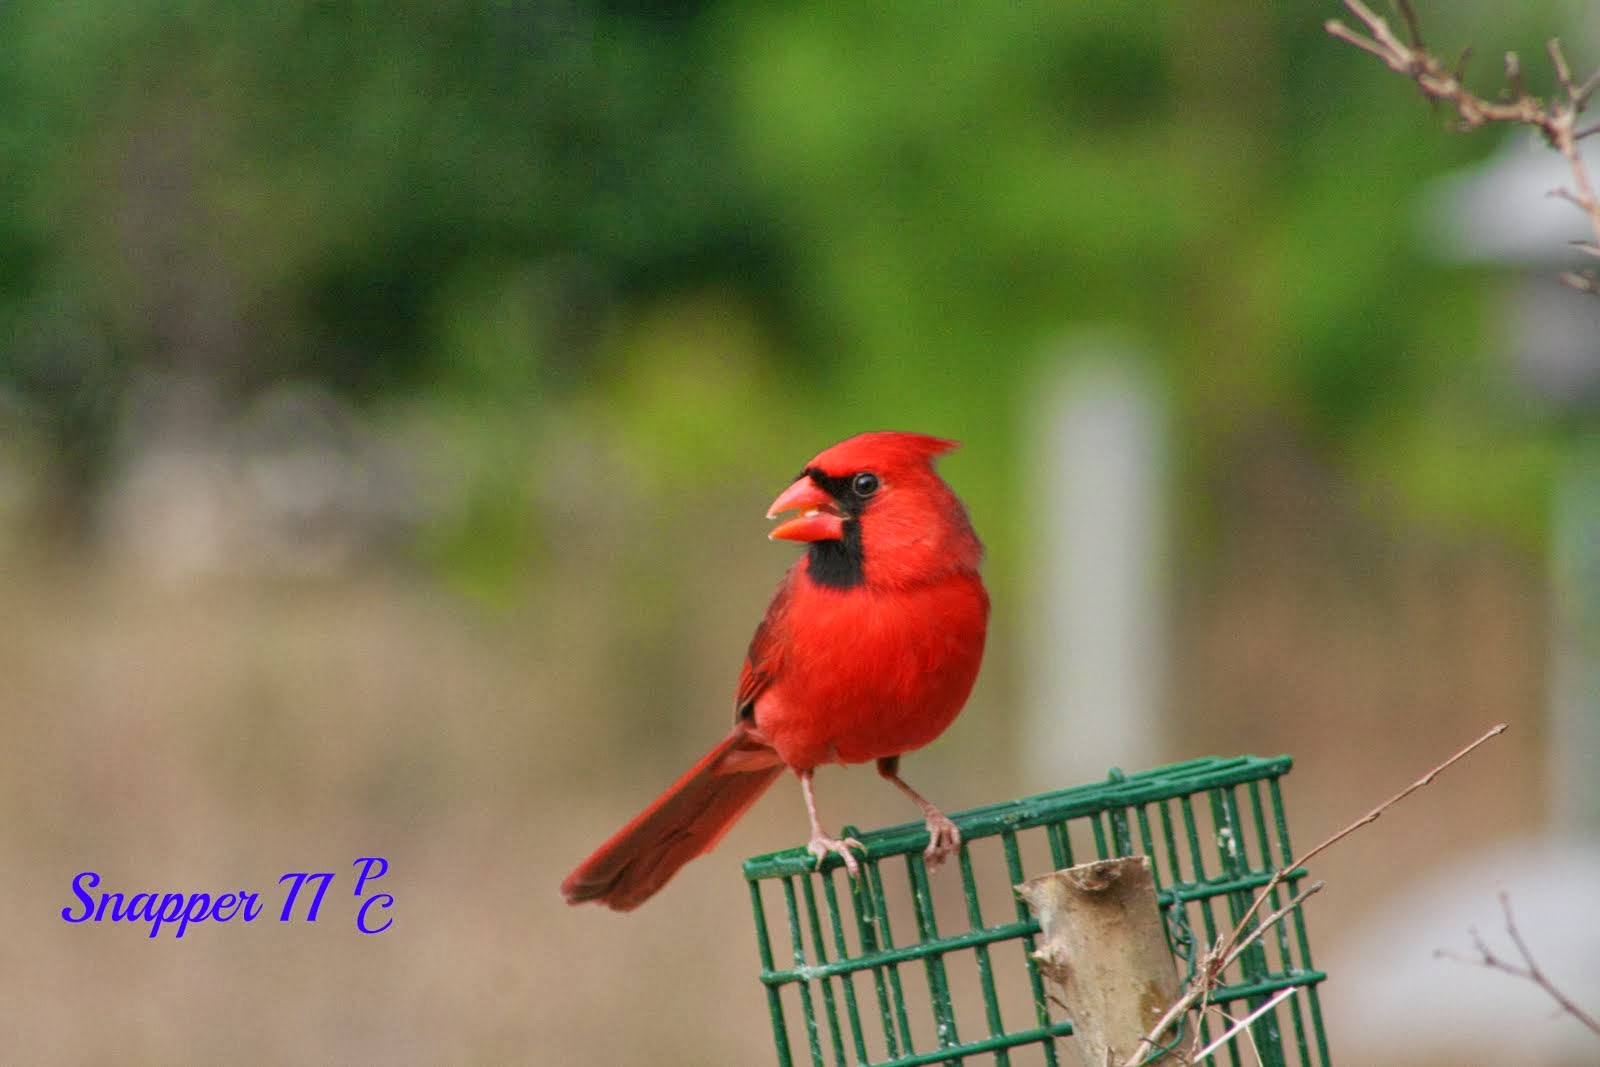 Cardinal Feeding